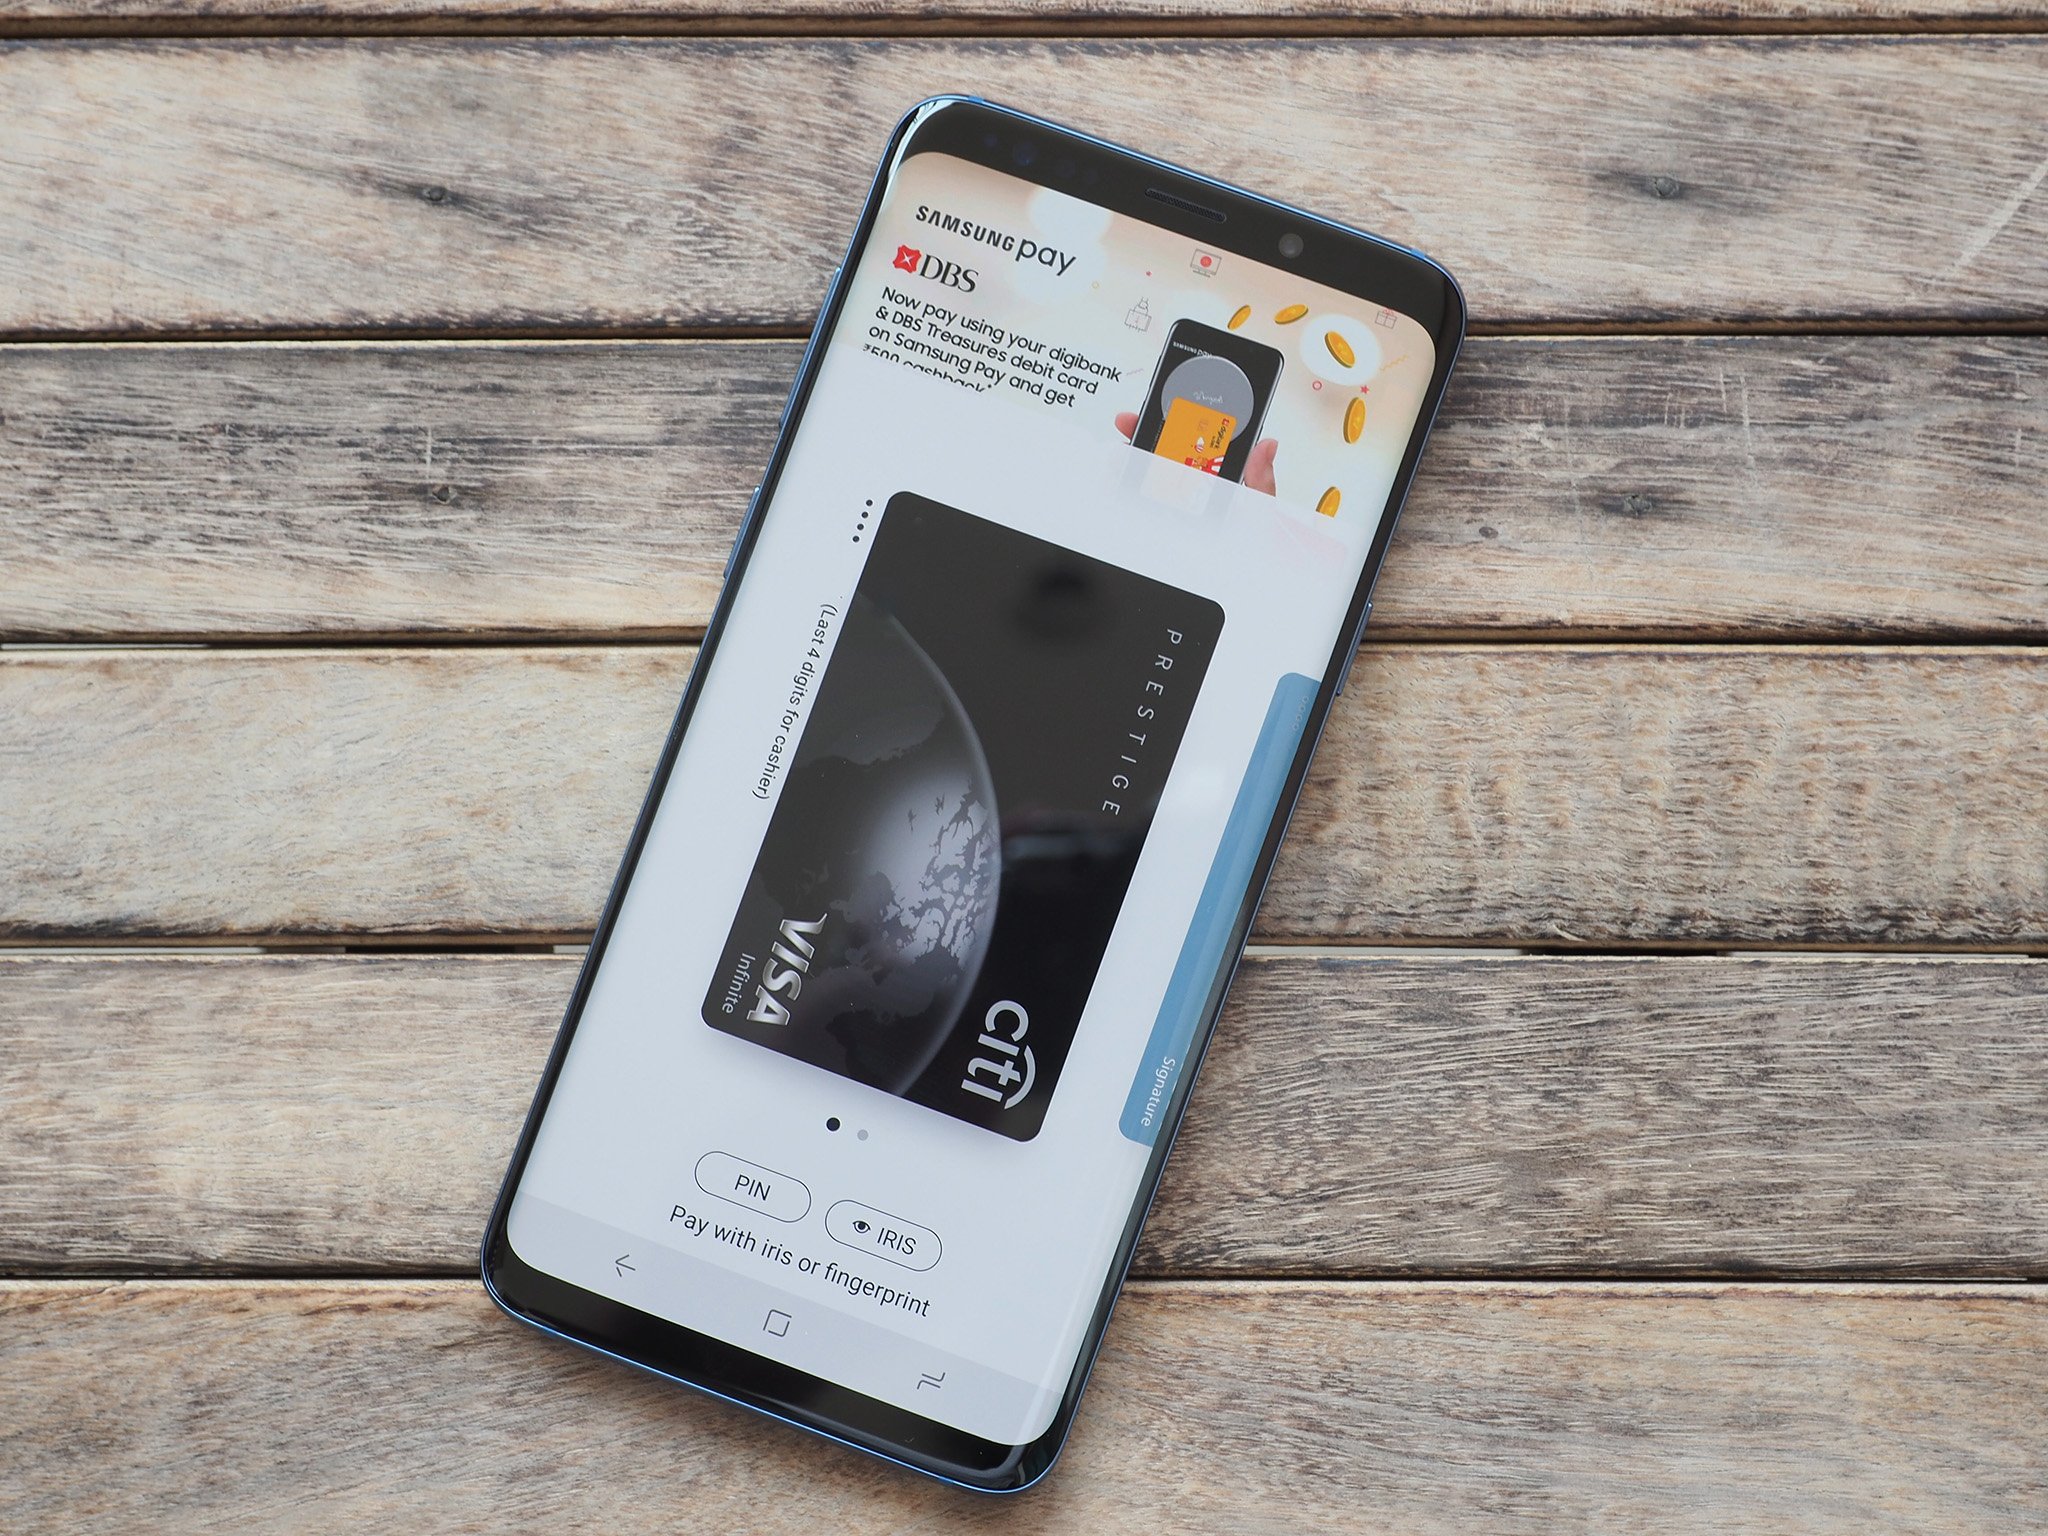 Samsung Galaxy S9+ with Samsung Pay